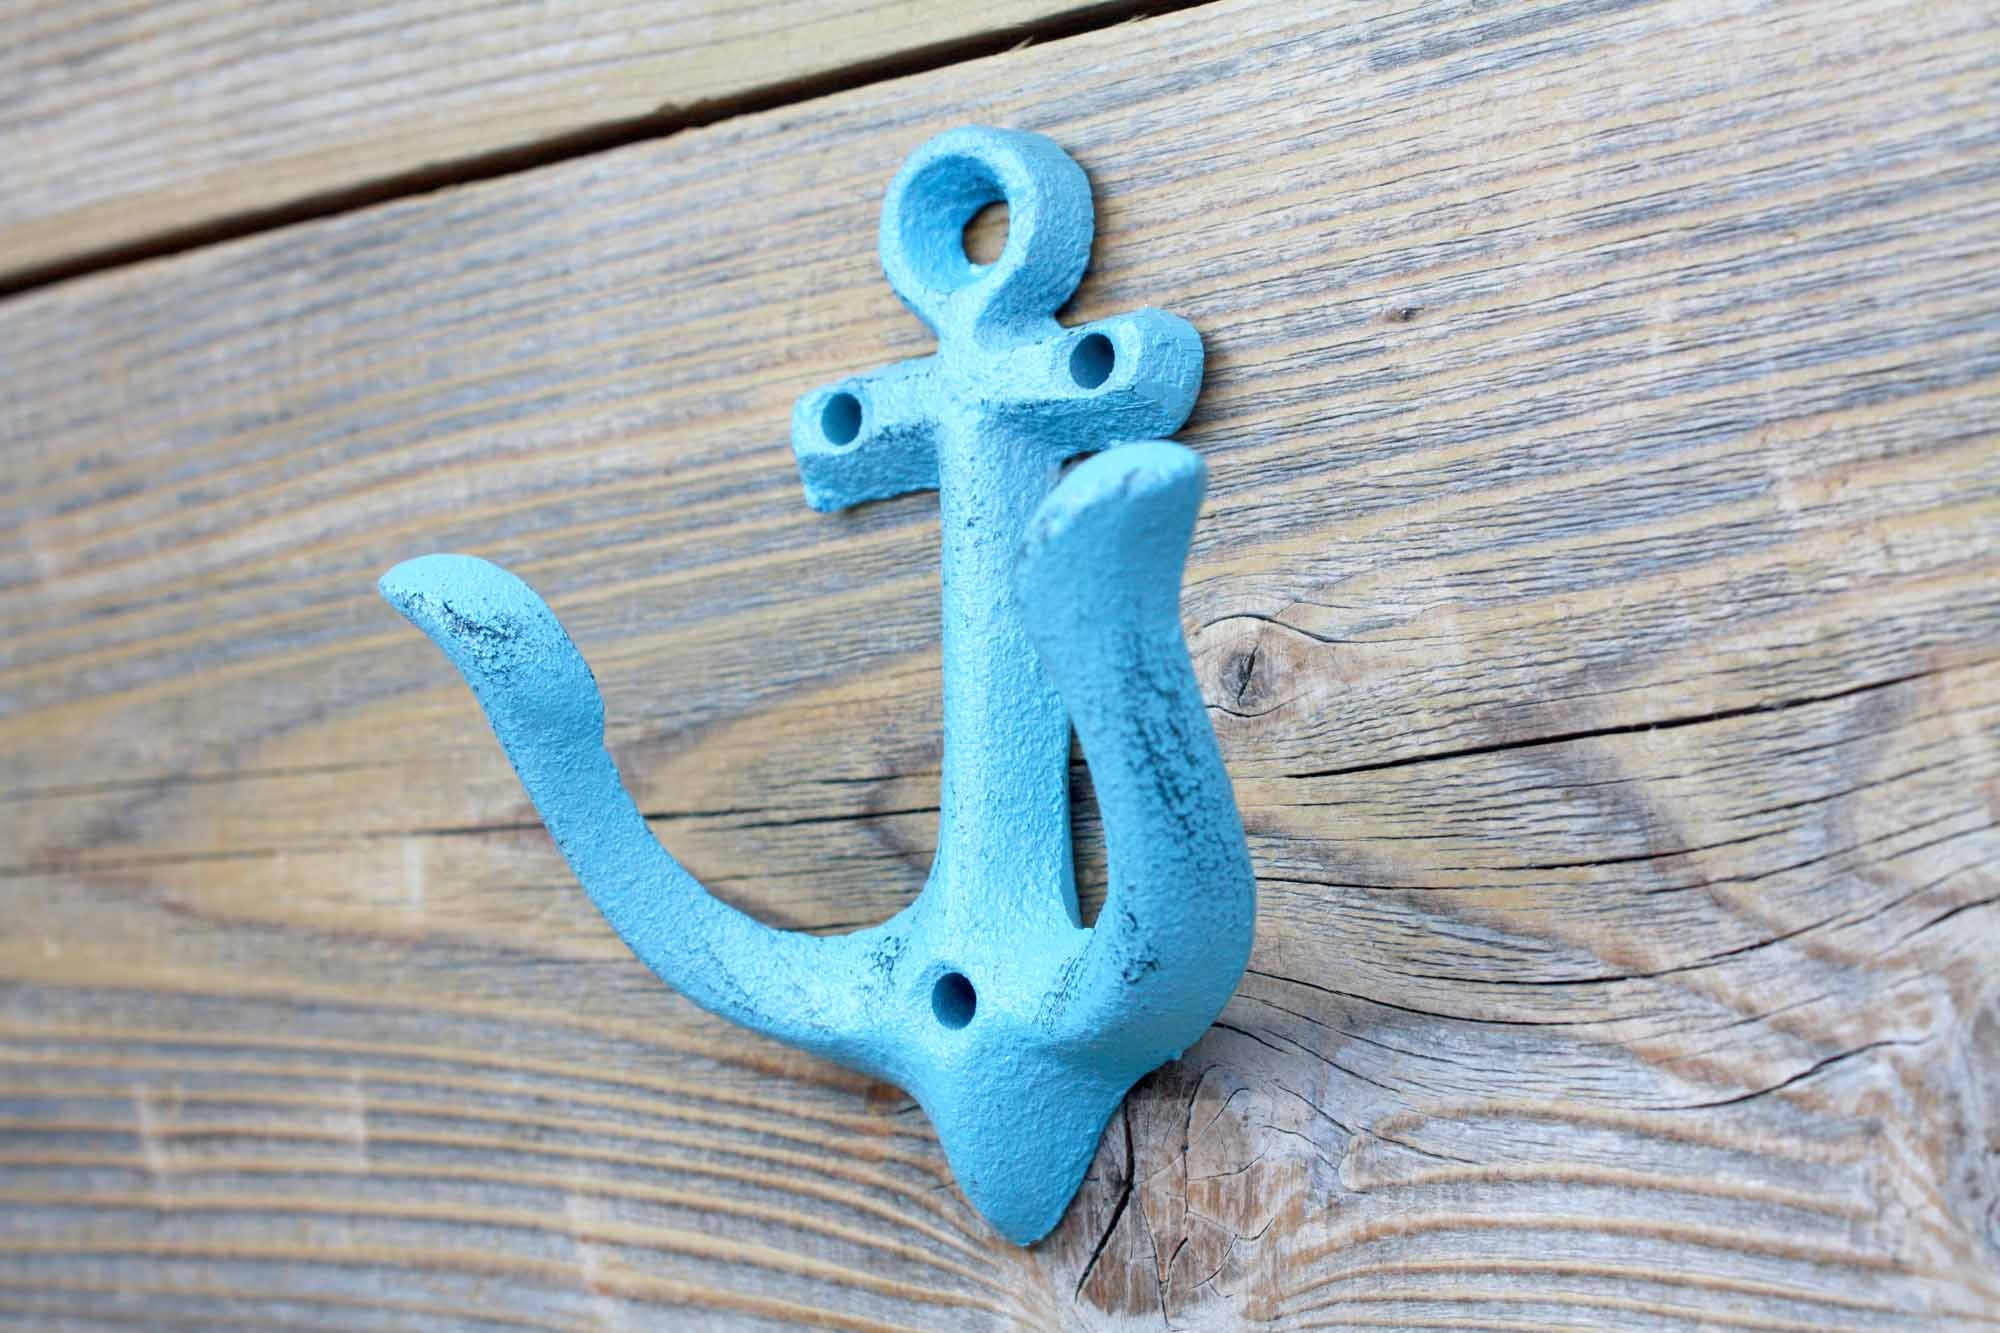 Nautical Decorative Cast Iron Fish Key Towel Coat Hook Hanger Wall Decor  Hangers for Aprons, Hats, Towels (Set of 3 Blue)